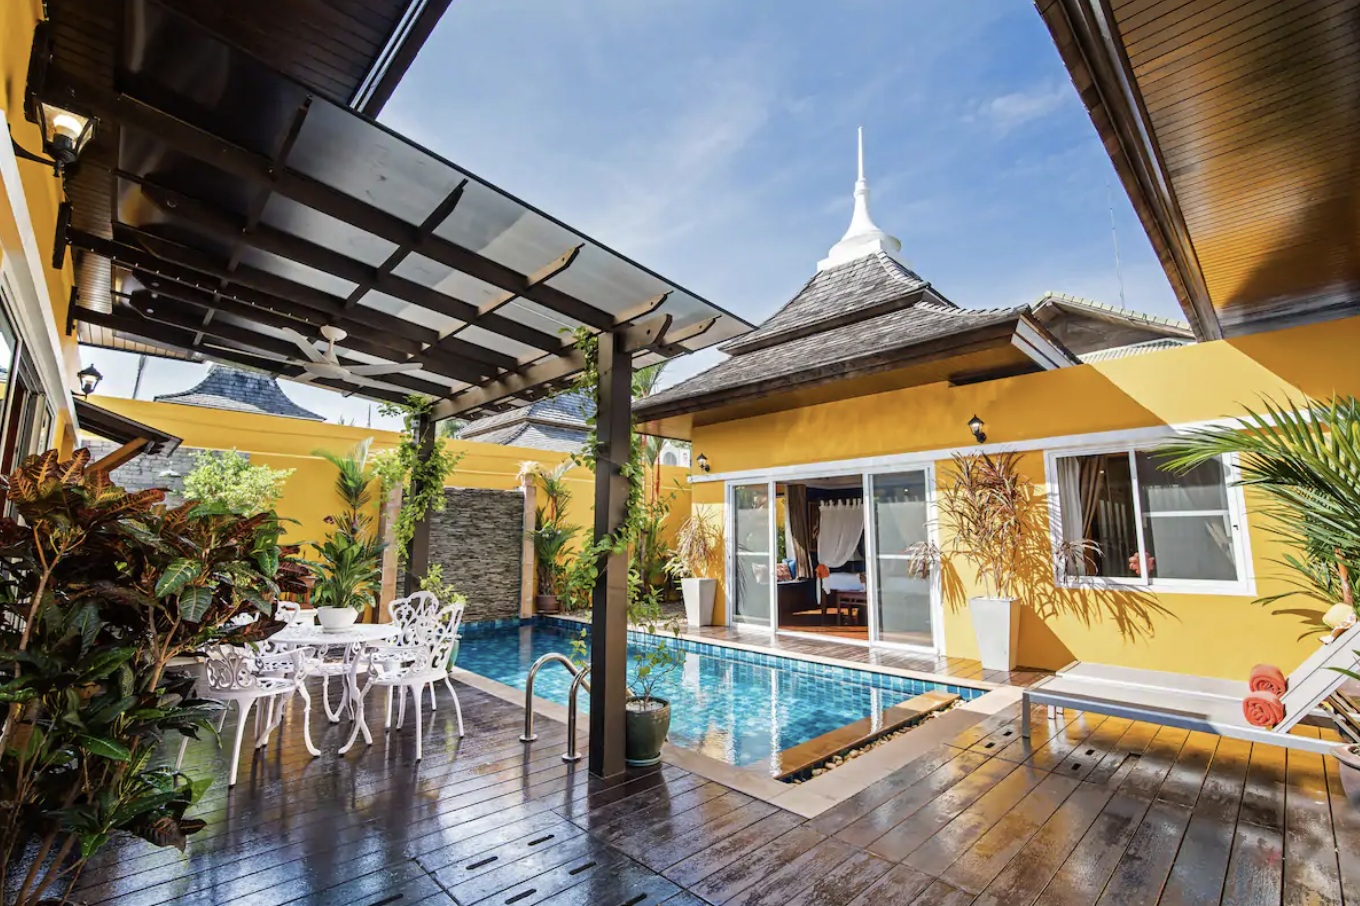 image mejores Airbnb para hospedarse en Tailandia czlynrD J1Xbwz4zWccbtkYM2GQ SiTVb5pL4Zf9nFZcxQbC8PpITLgwDD54XlHVl